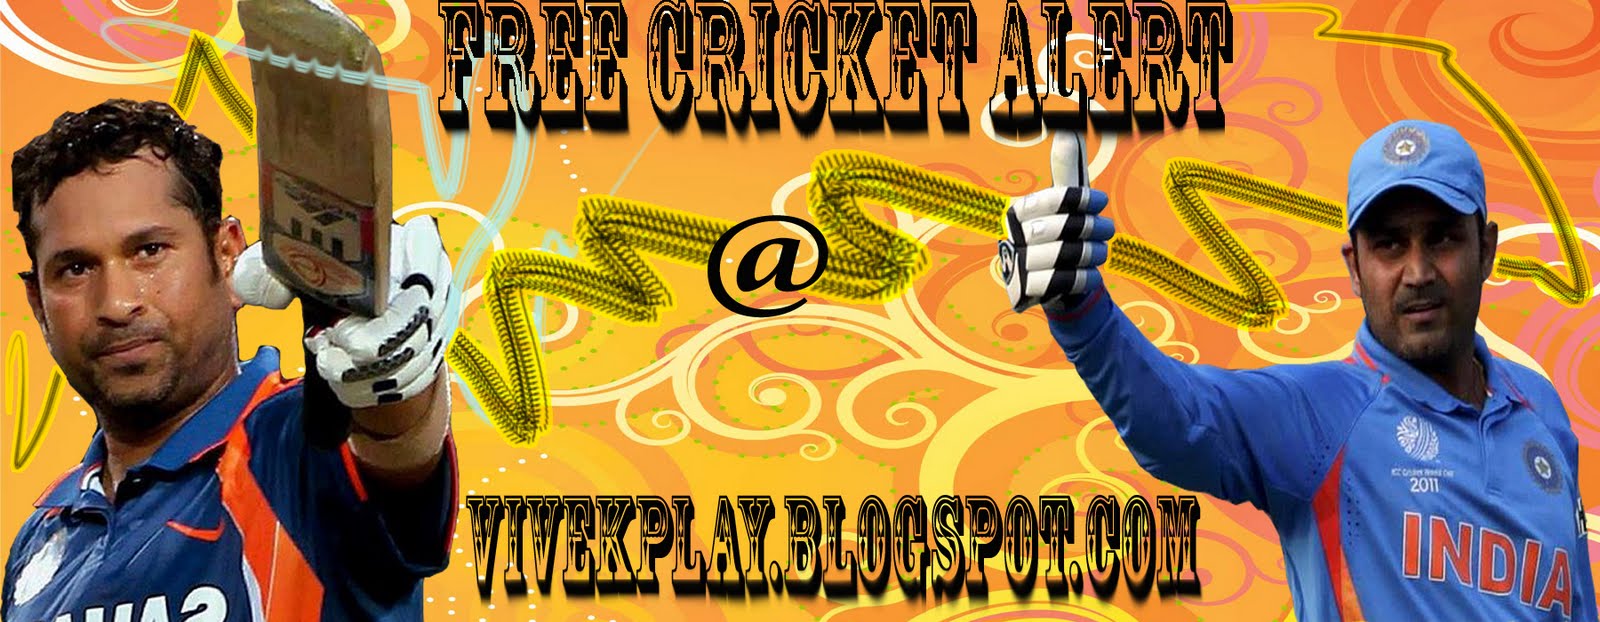 Free Cricket Alert